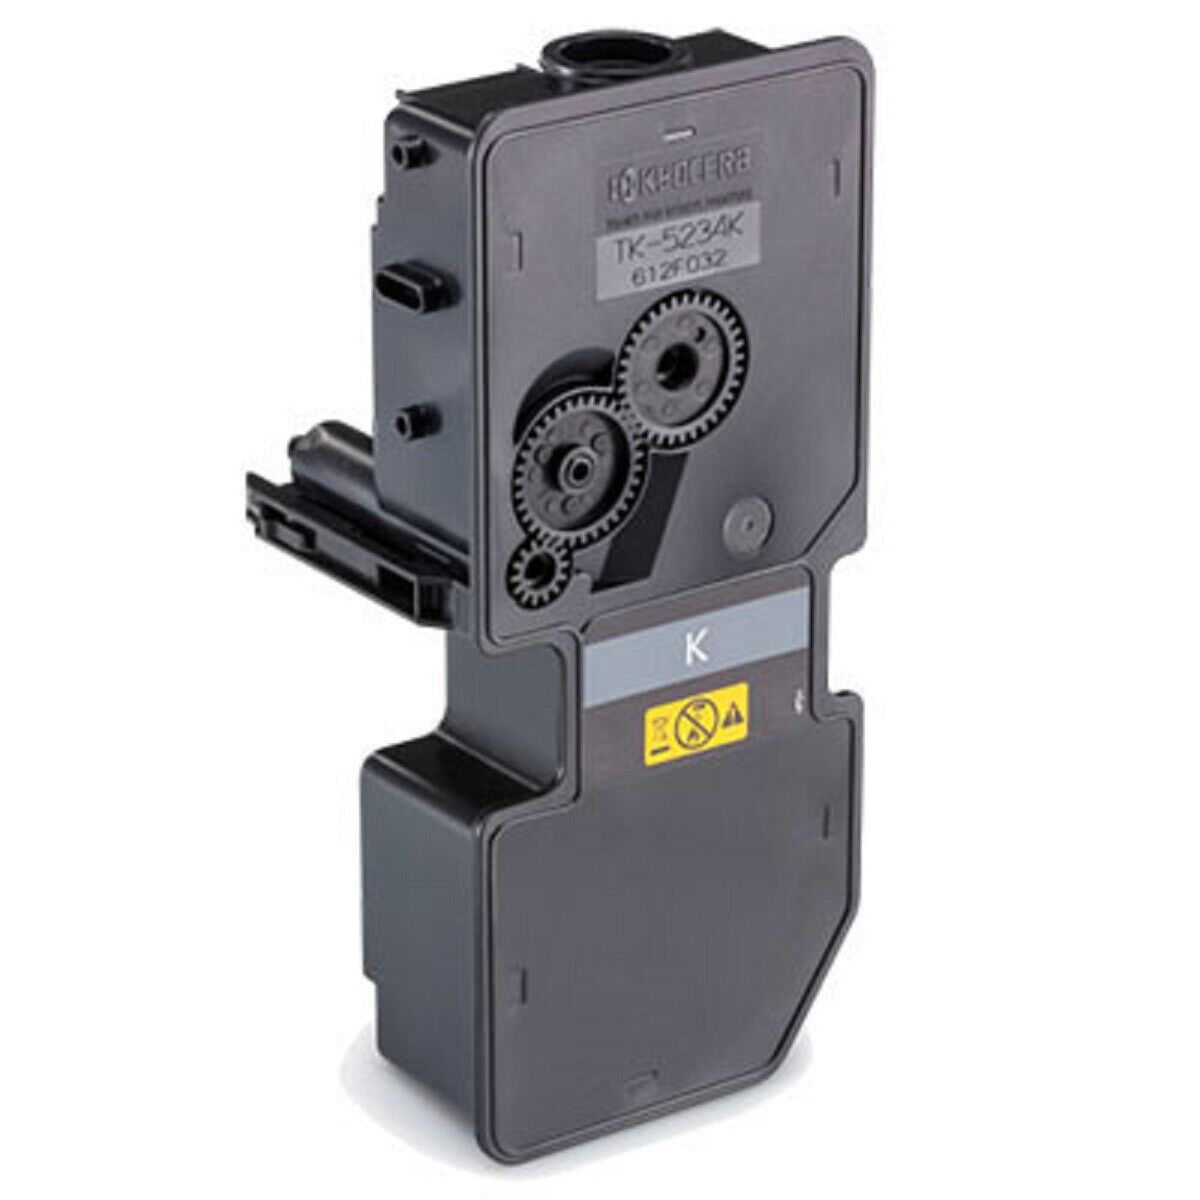 2x Non-Genuine TK-5244 Toner Cartridge for Kyocera M5526 P5026 M5526CDN Printer Unbranded Does not apply - фотография #2